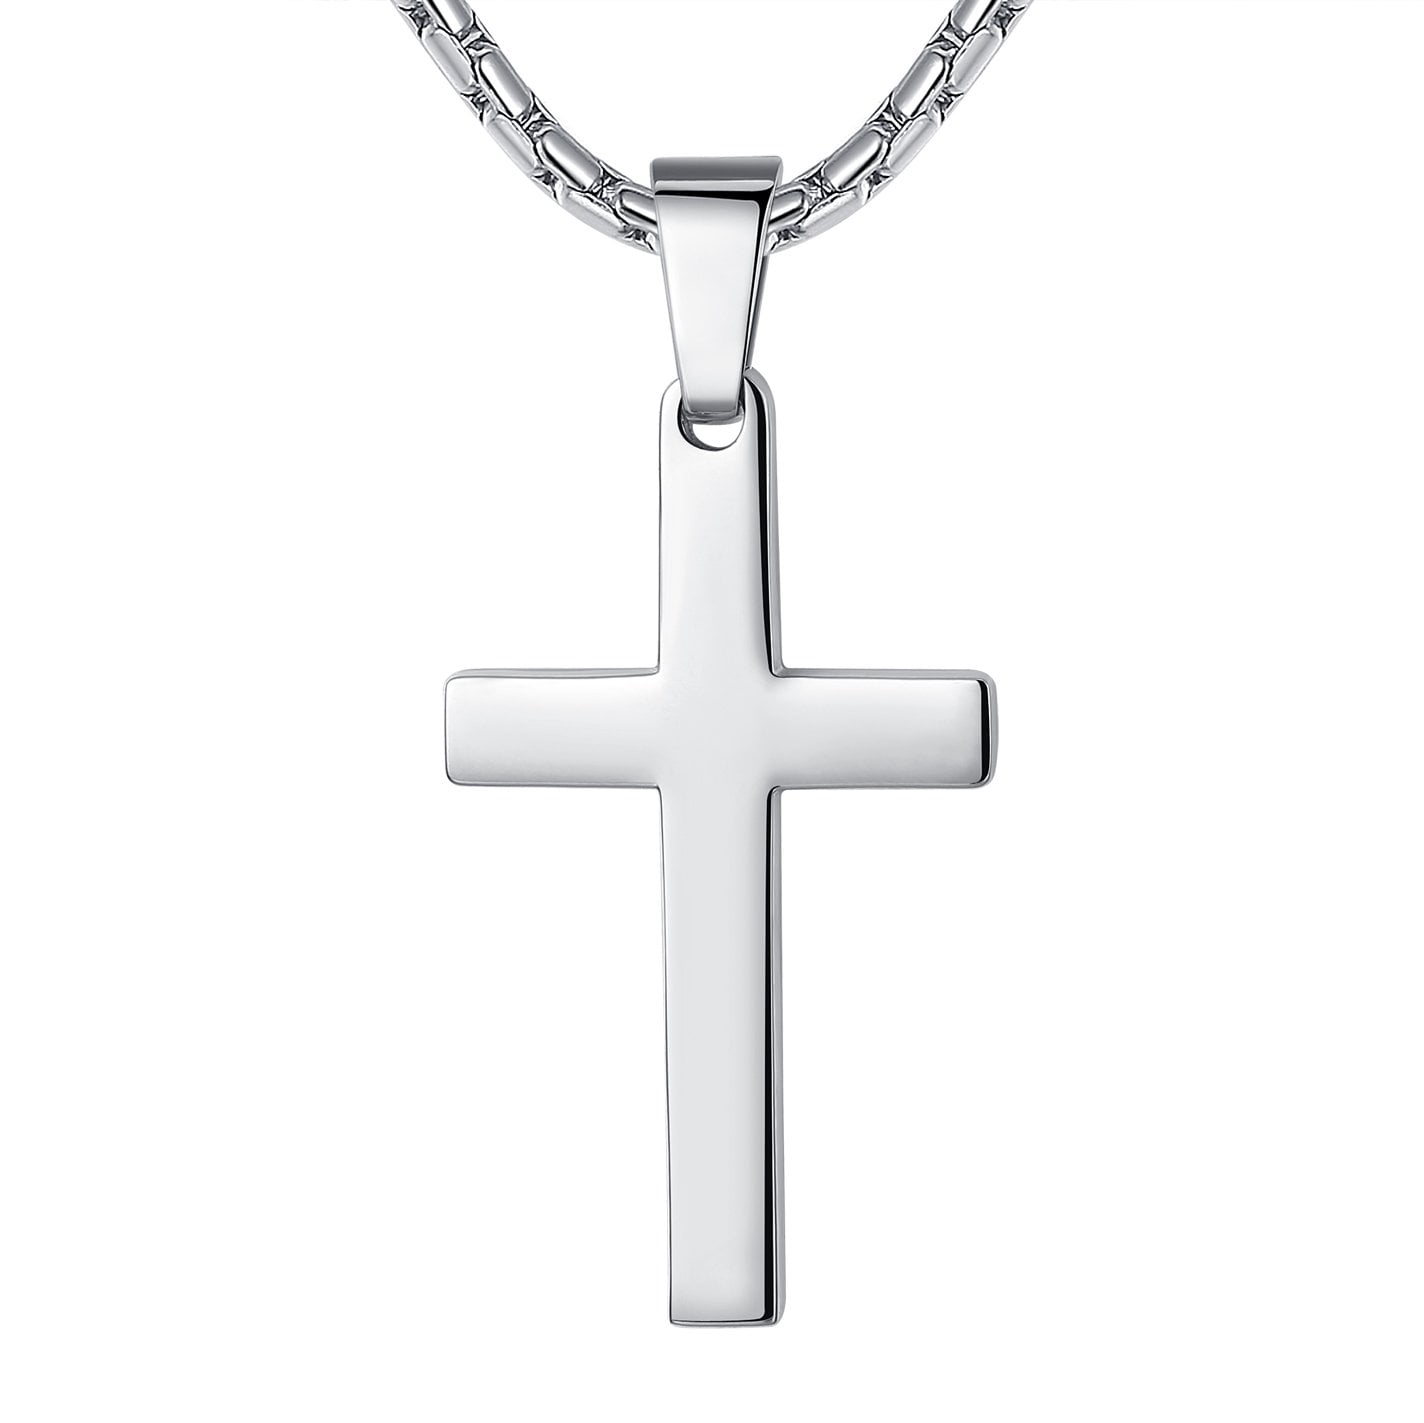 Unisex's Men Blue/Black Silver Stainless Steel Cross Pendant Necklace Chain Gift 